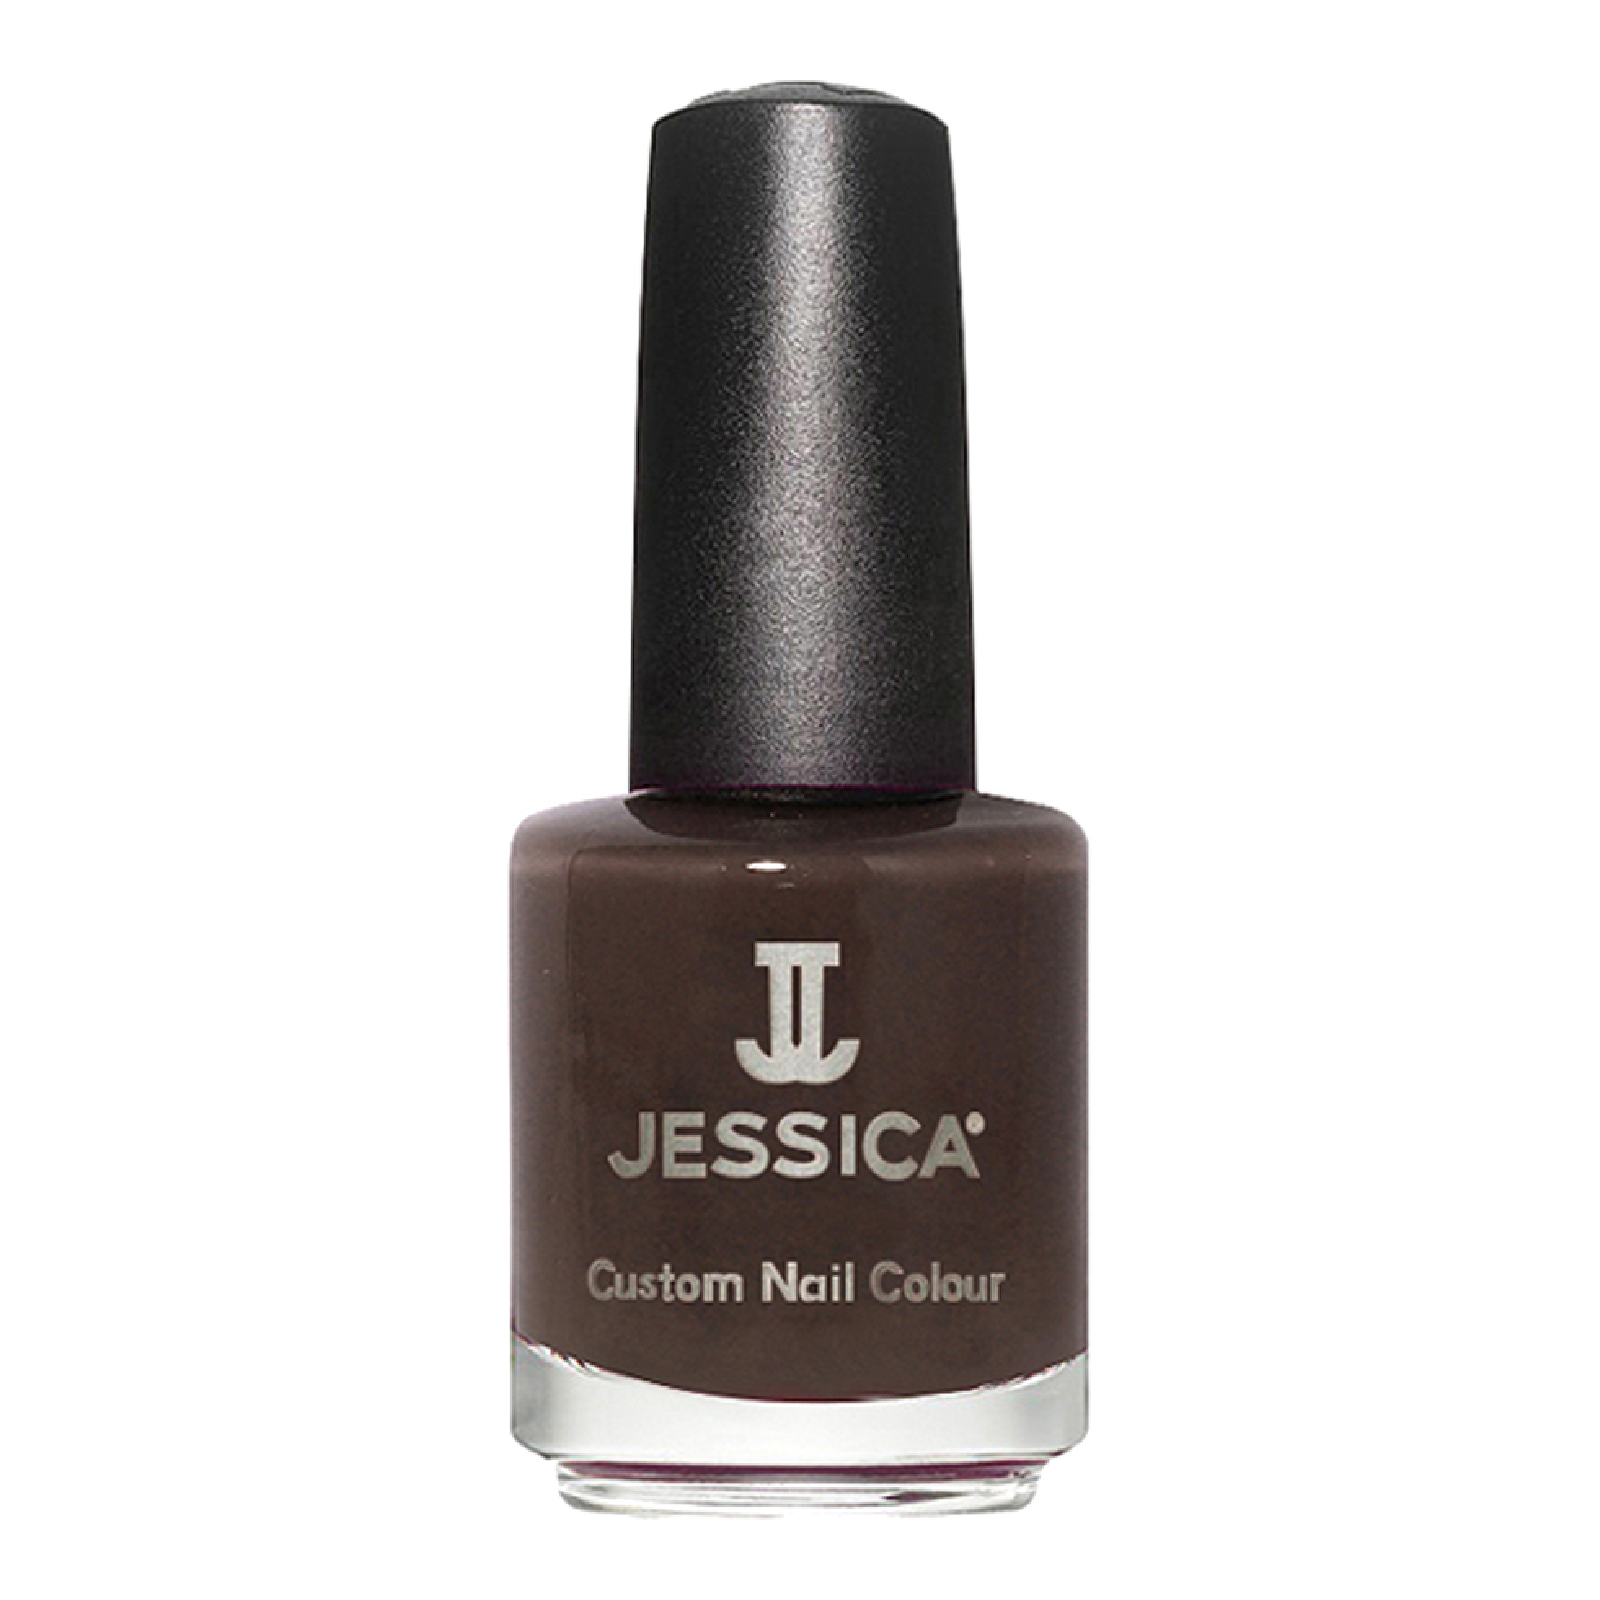 Image of Jessica Custom Nail Colour - Snake Pit 15ml